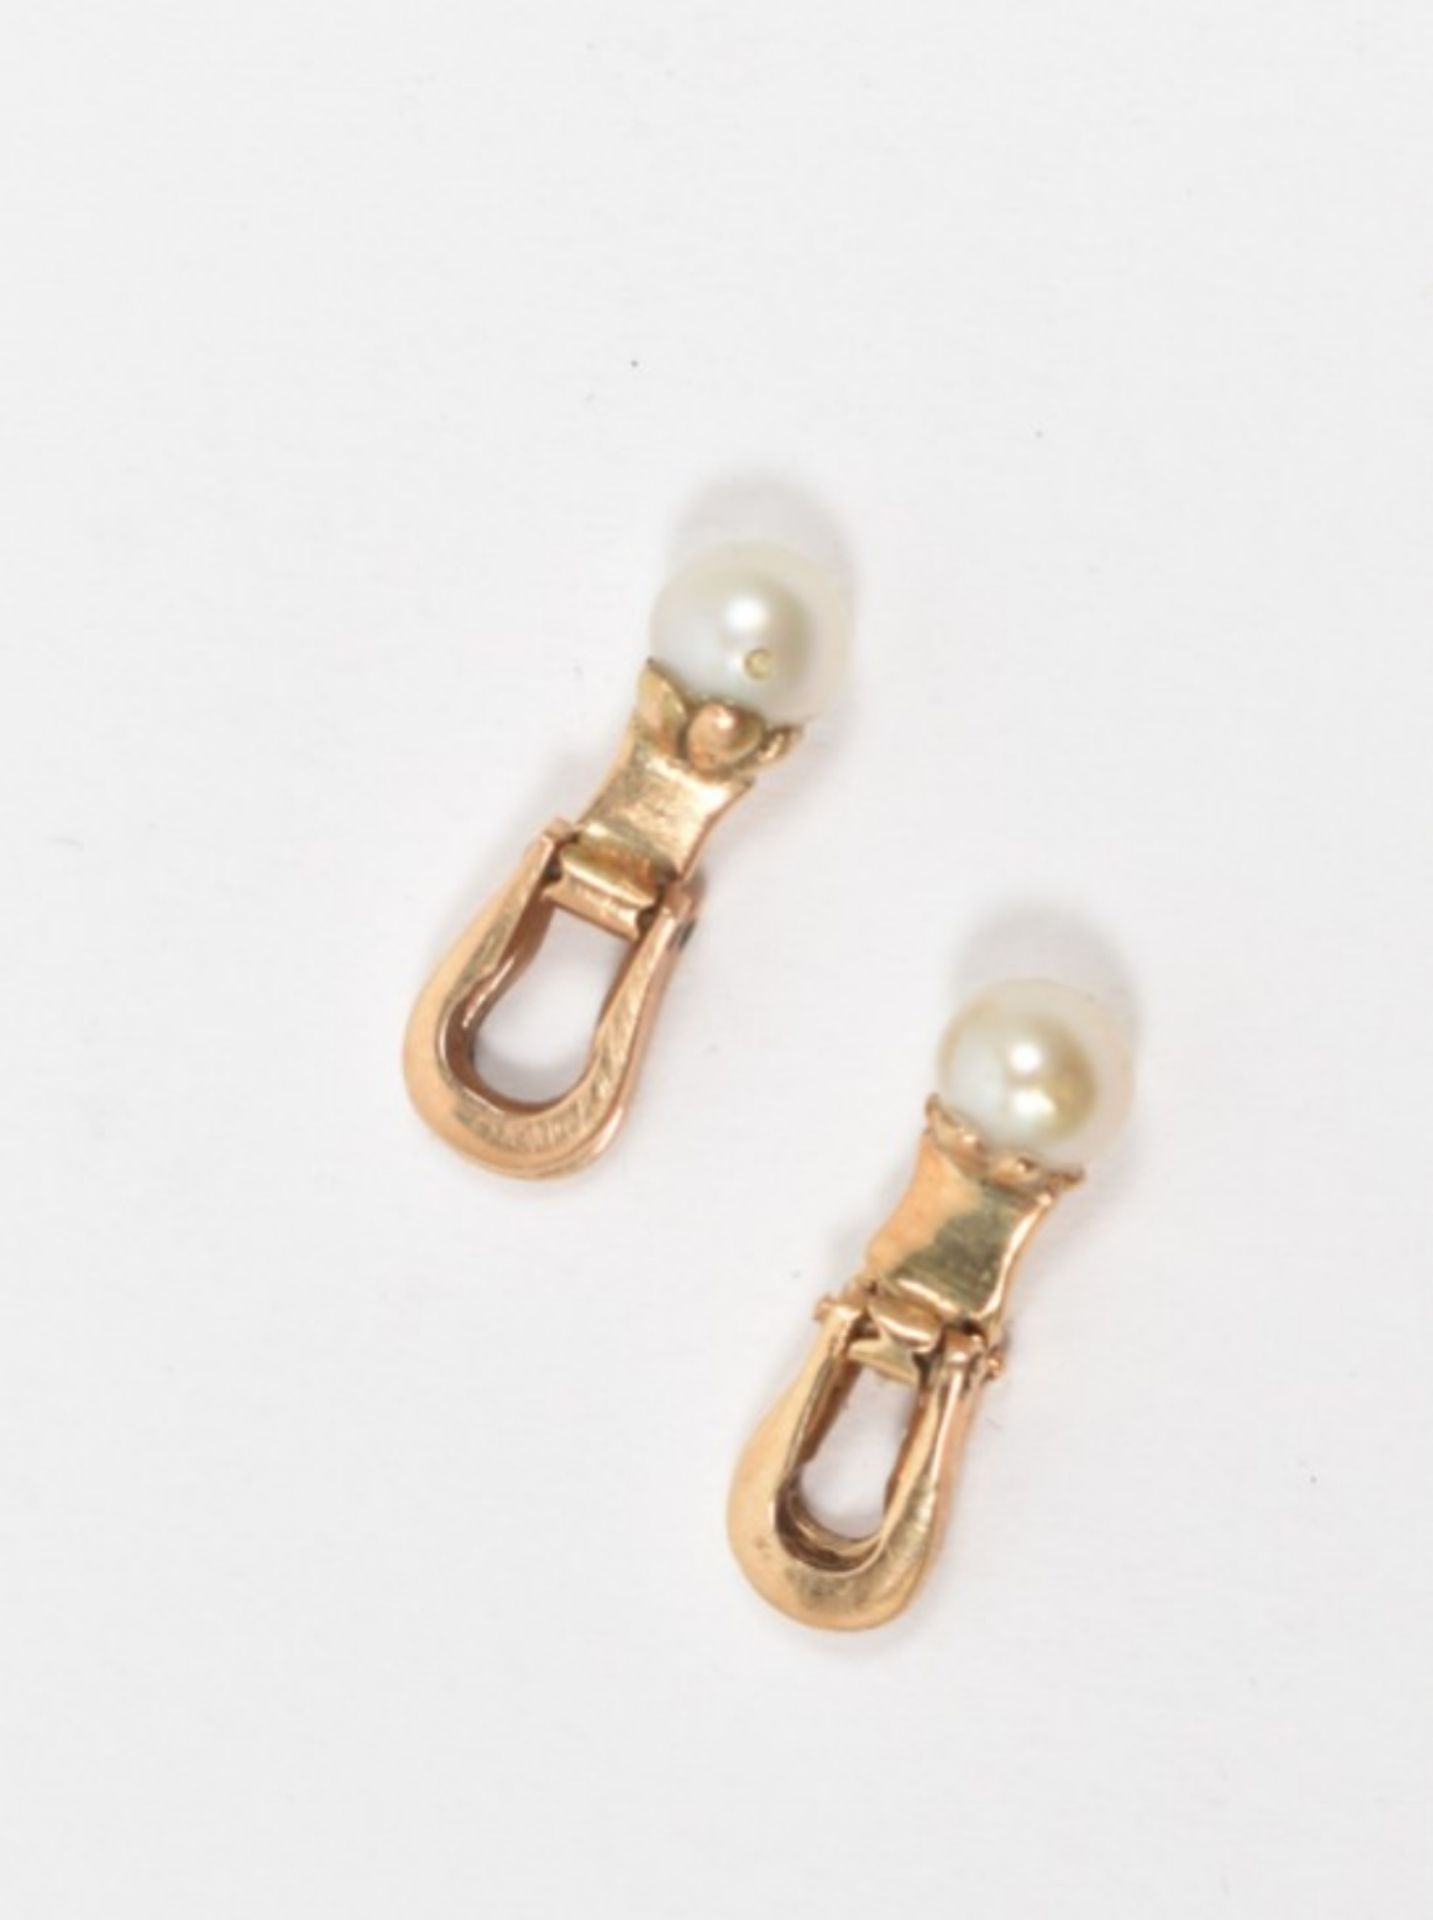 Pair of gold pearl earings  - Image 4 of 5